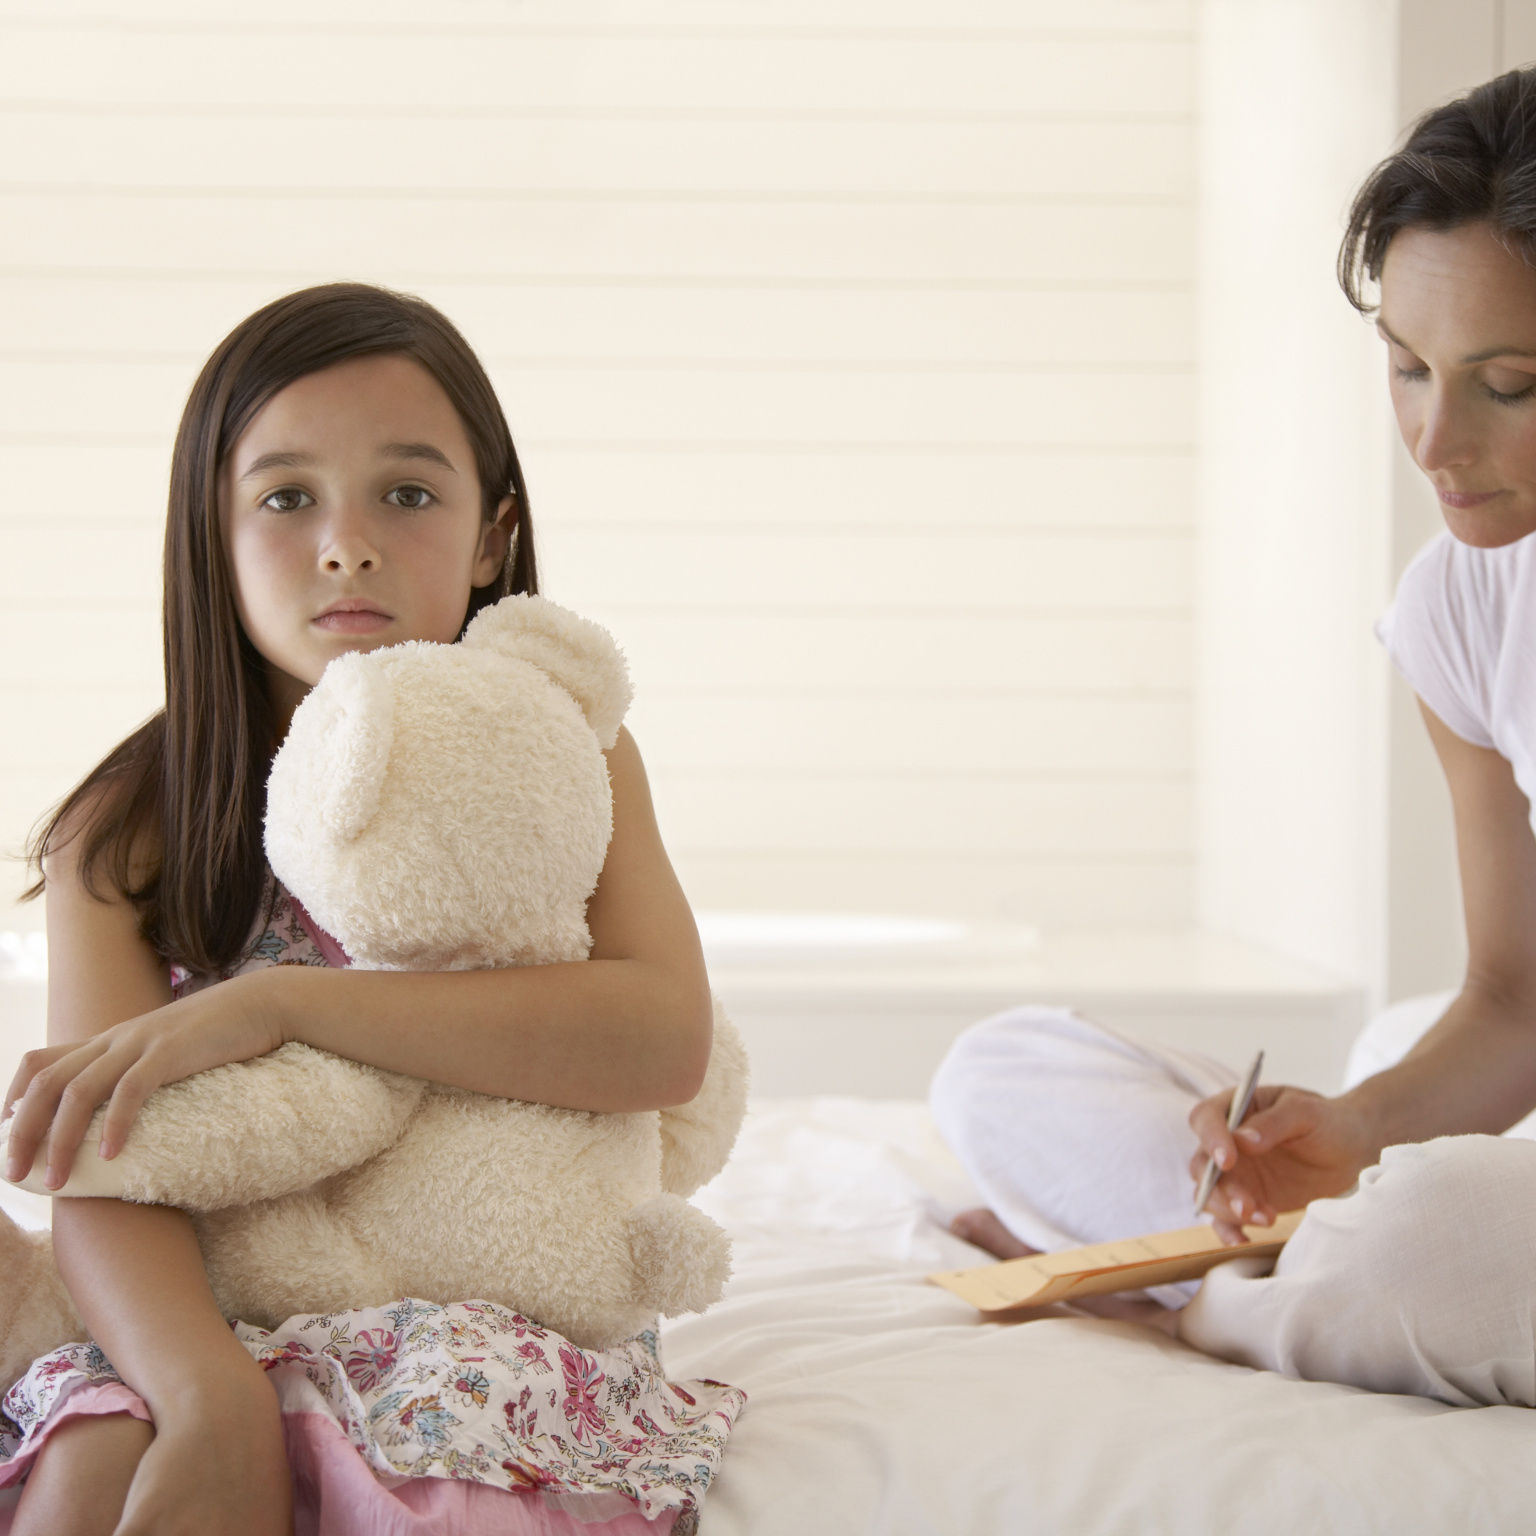 How to Heal Childhood Trauma